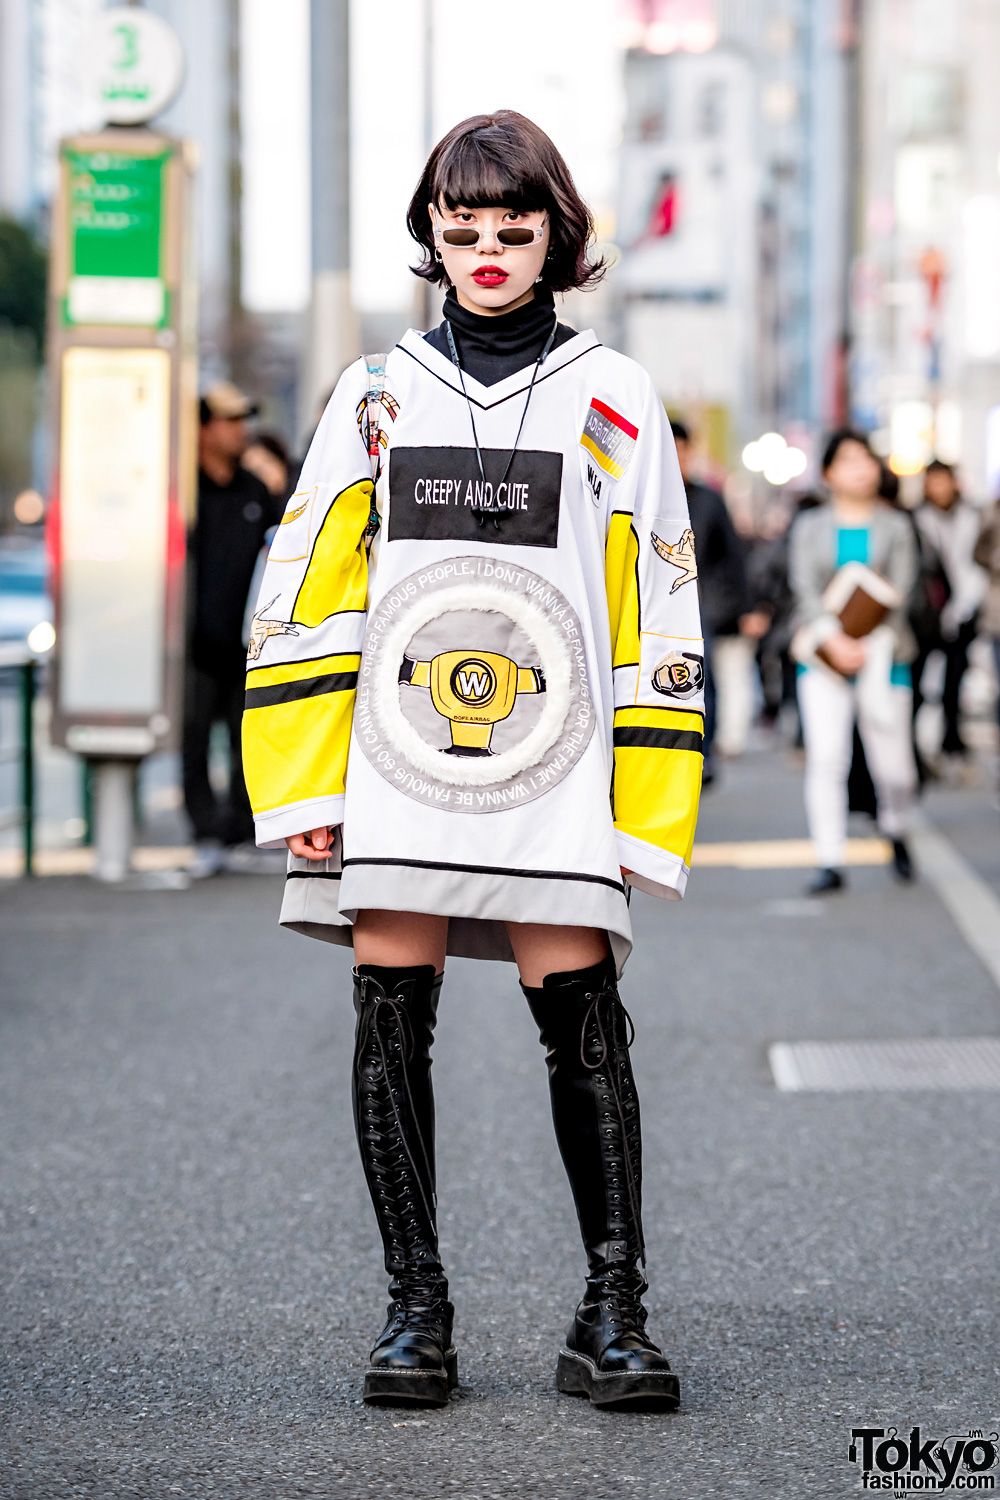 Harajuku Girl Street Style w/ W.I.A Creepy & Cute Shirt, Demonia Knee-High Boots, Opening Ceremony Tote & Dog Harajuku Sunglasses